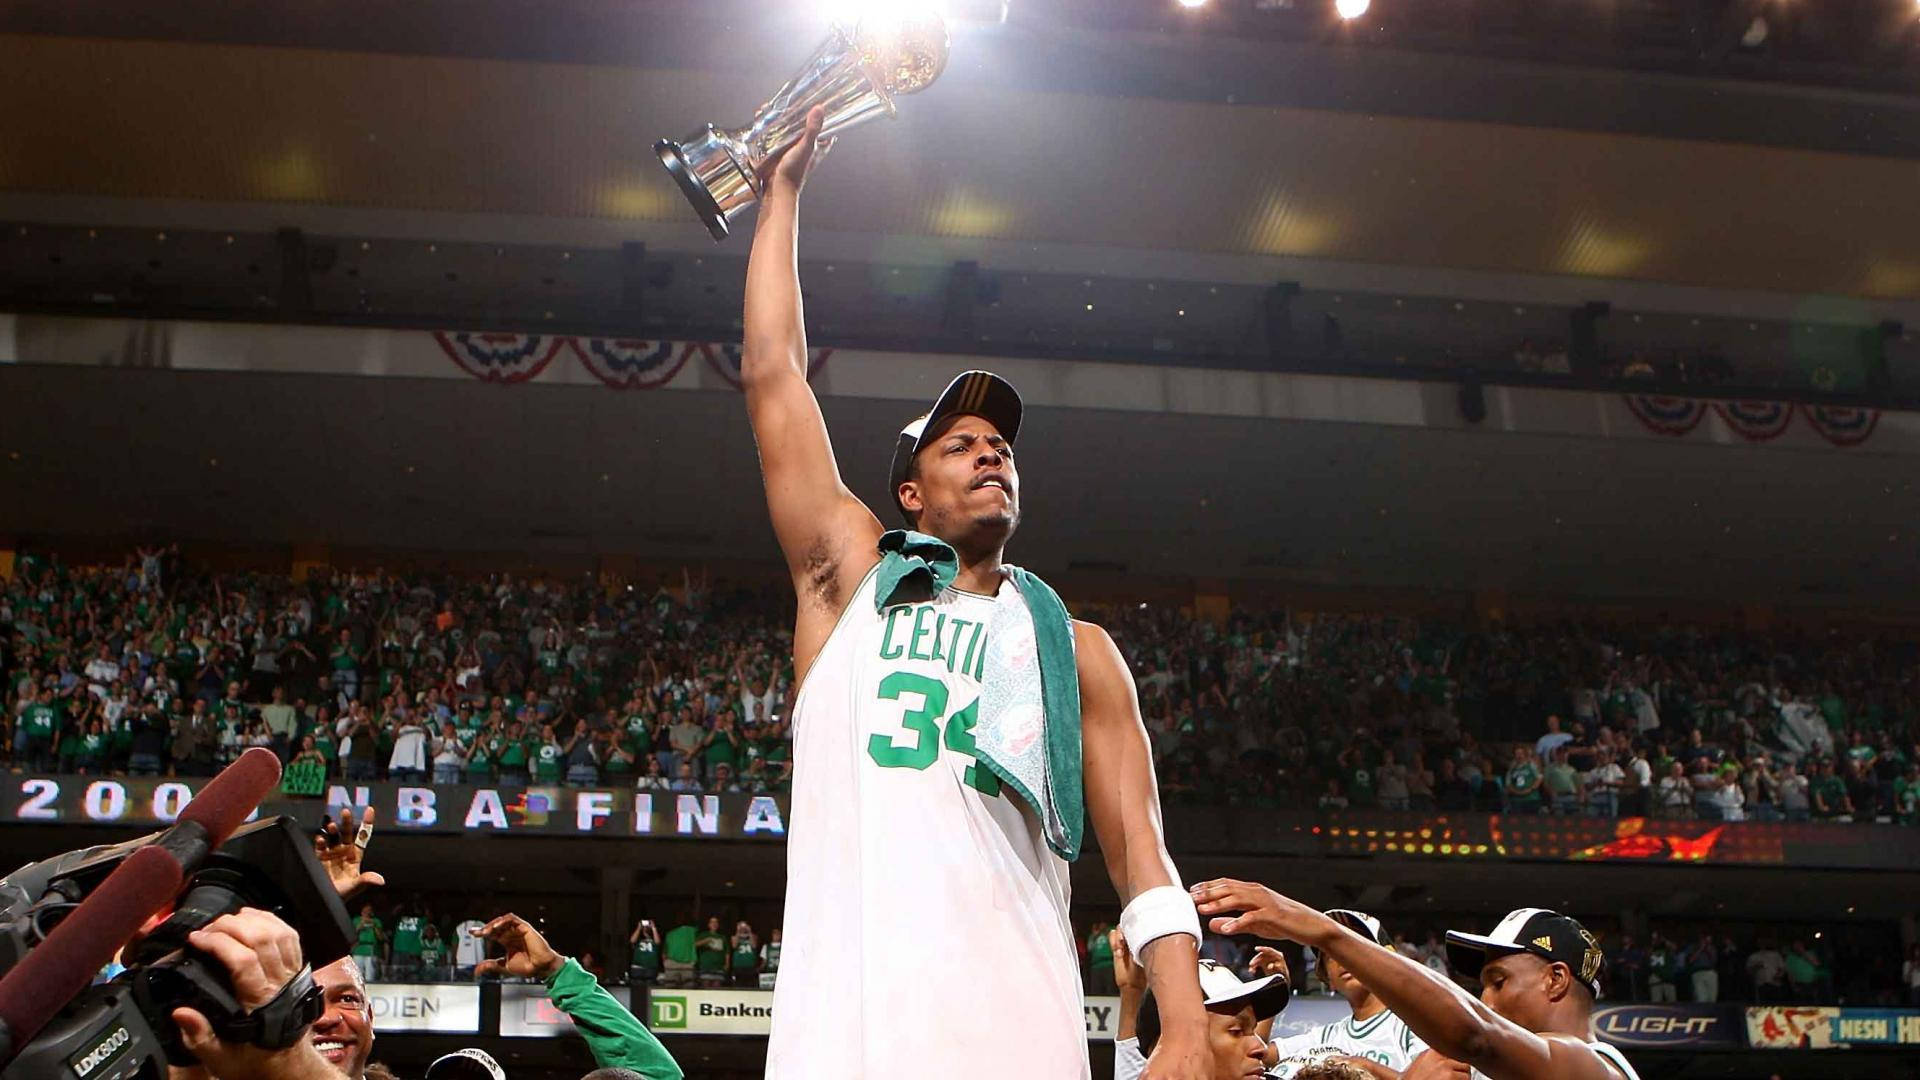 Nba Finals Celtics Championship Background